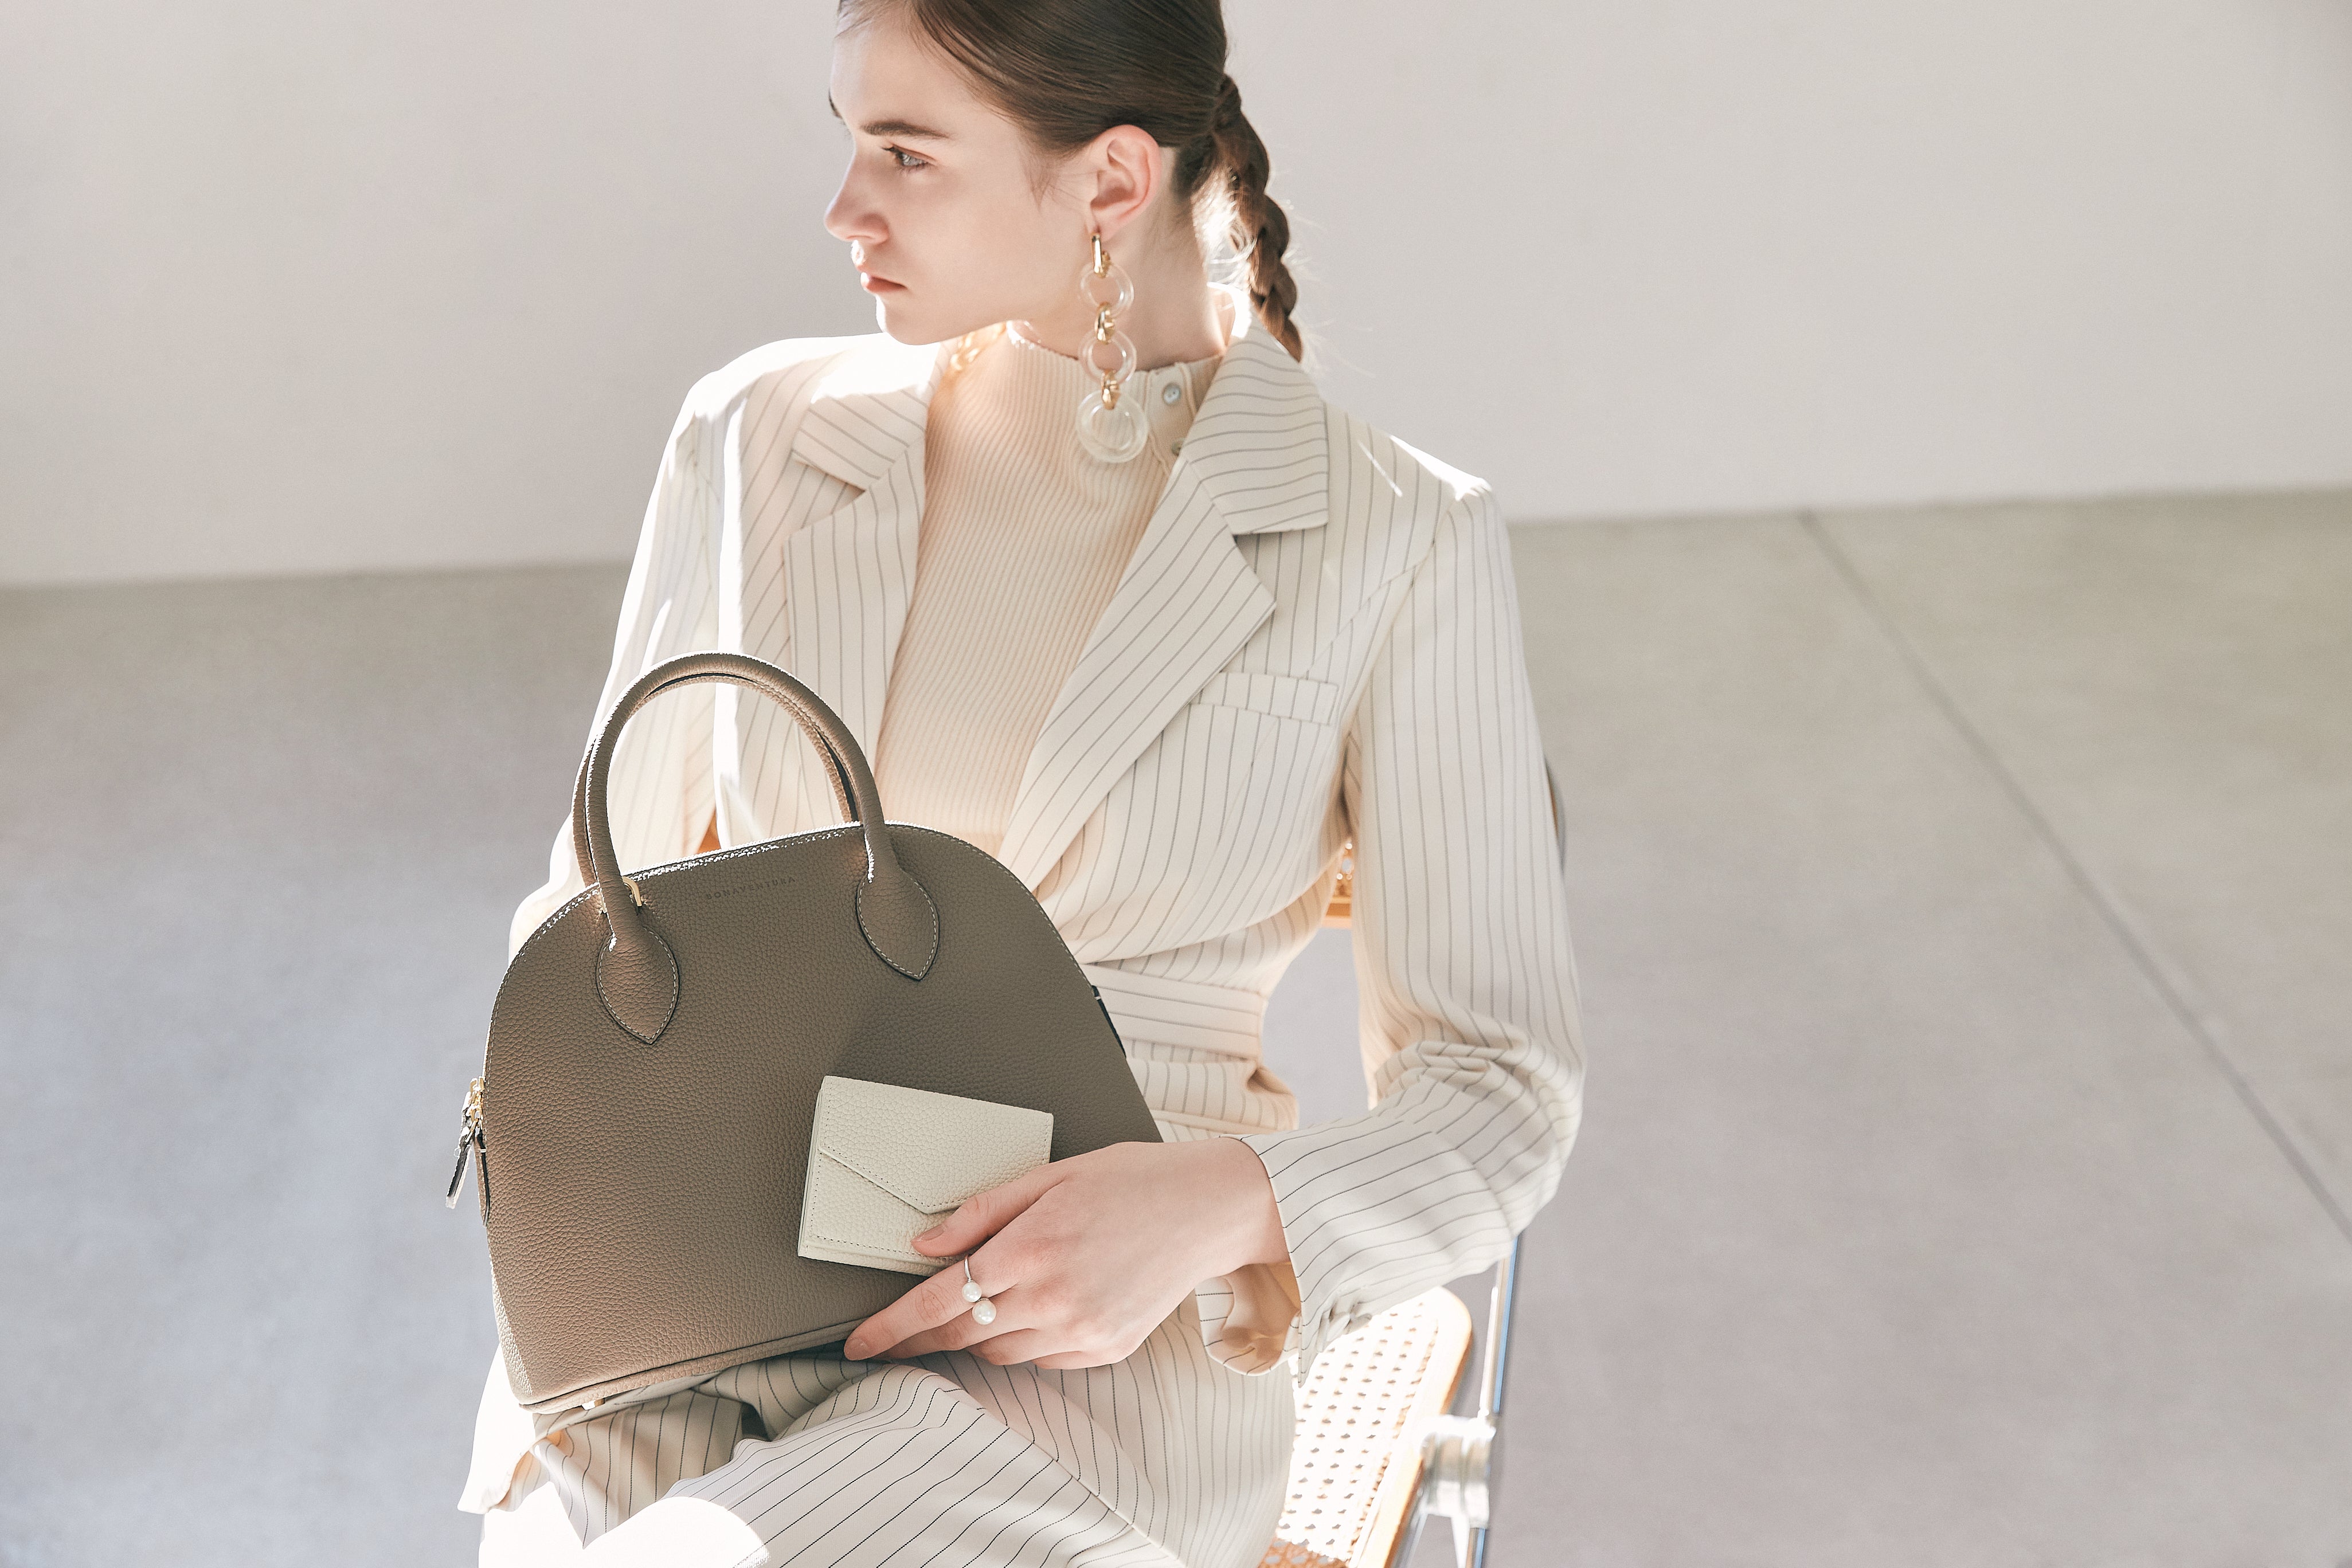 Confident business woman in stylish and elegant business attire carrying a BONAVENTURA handbag.